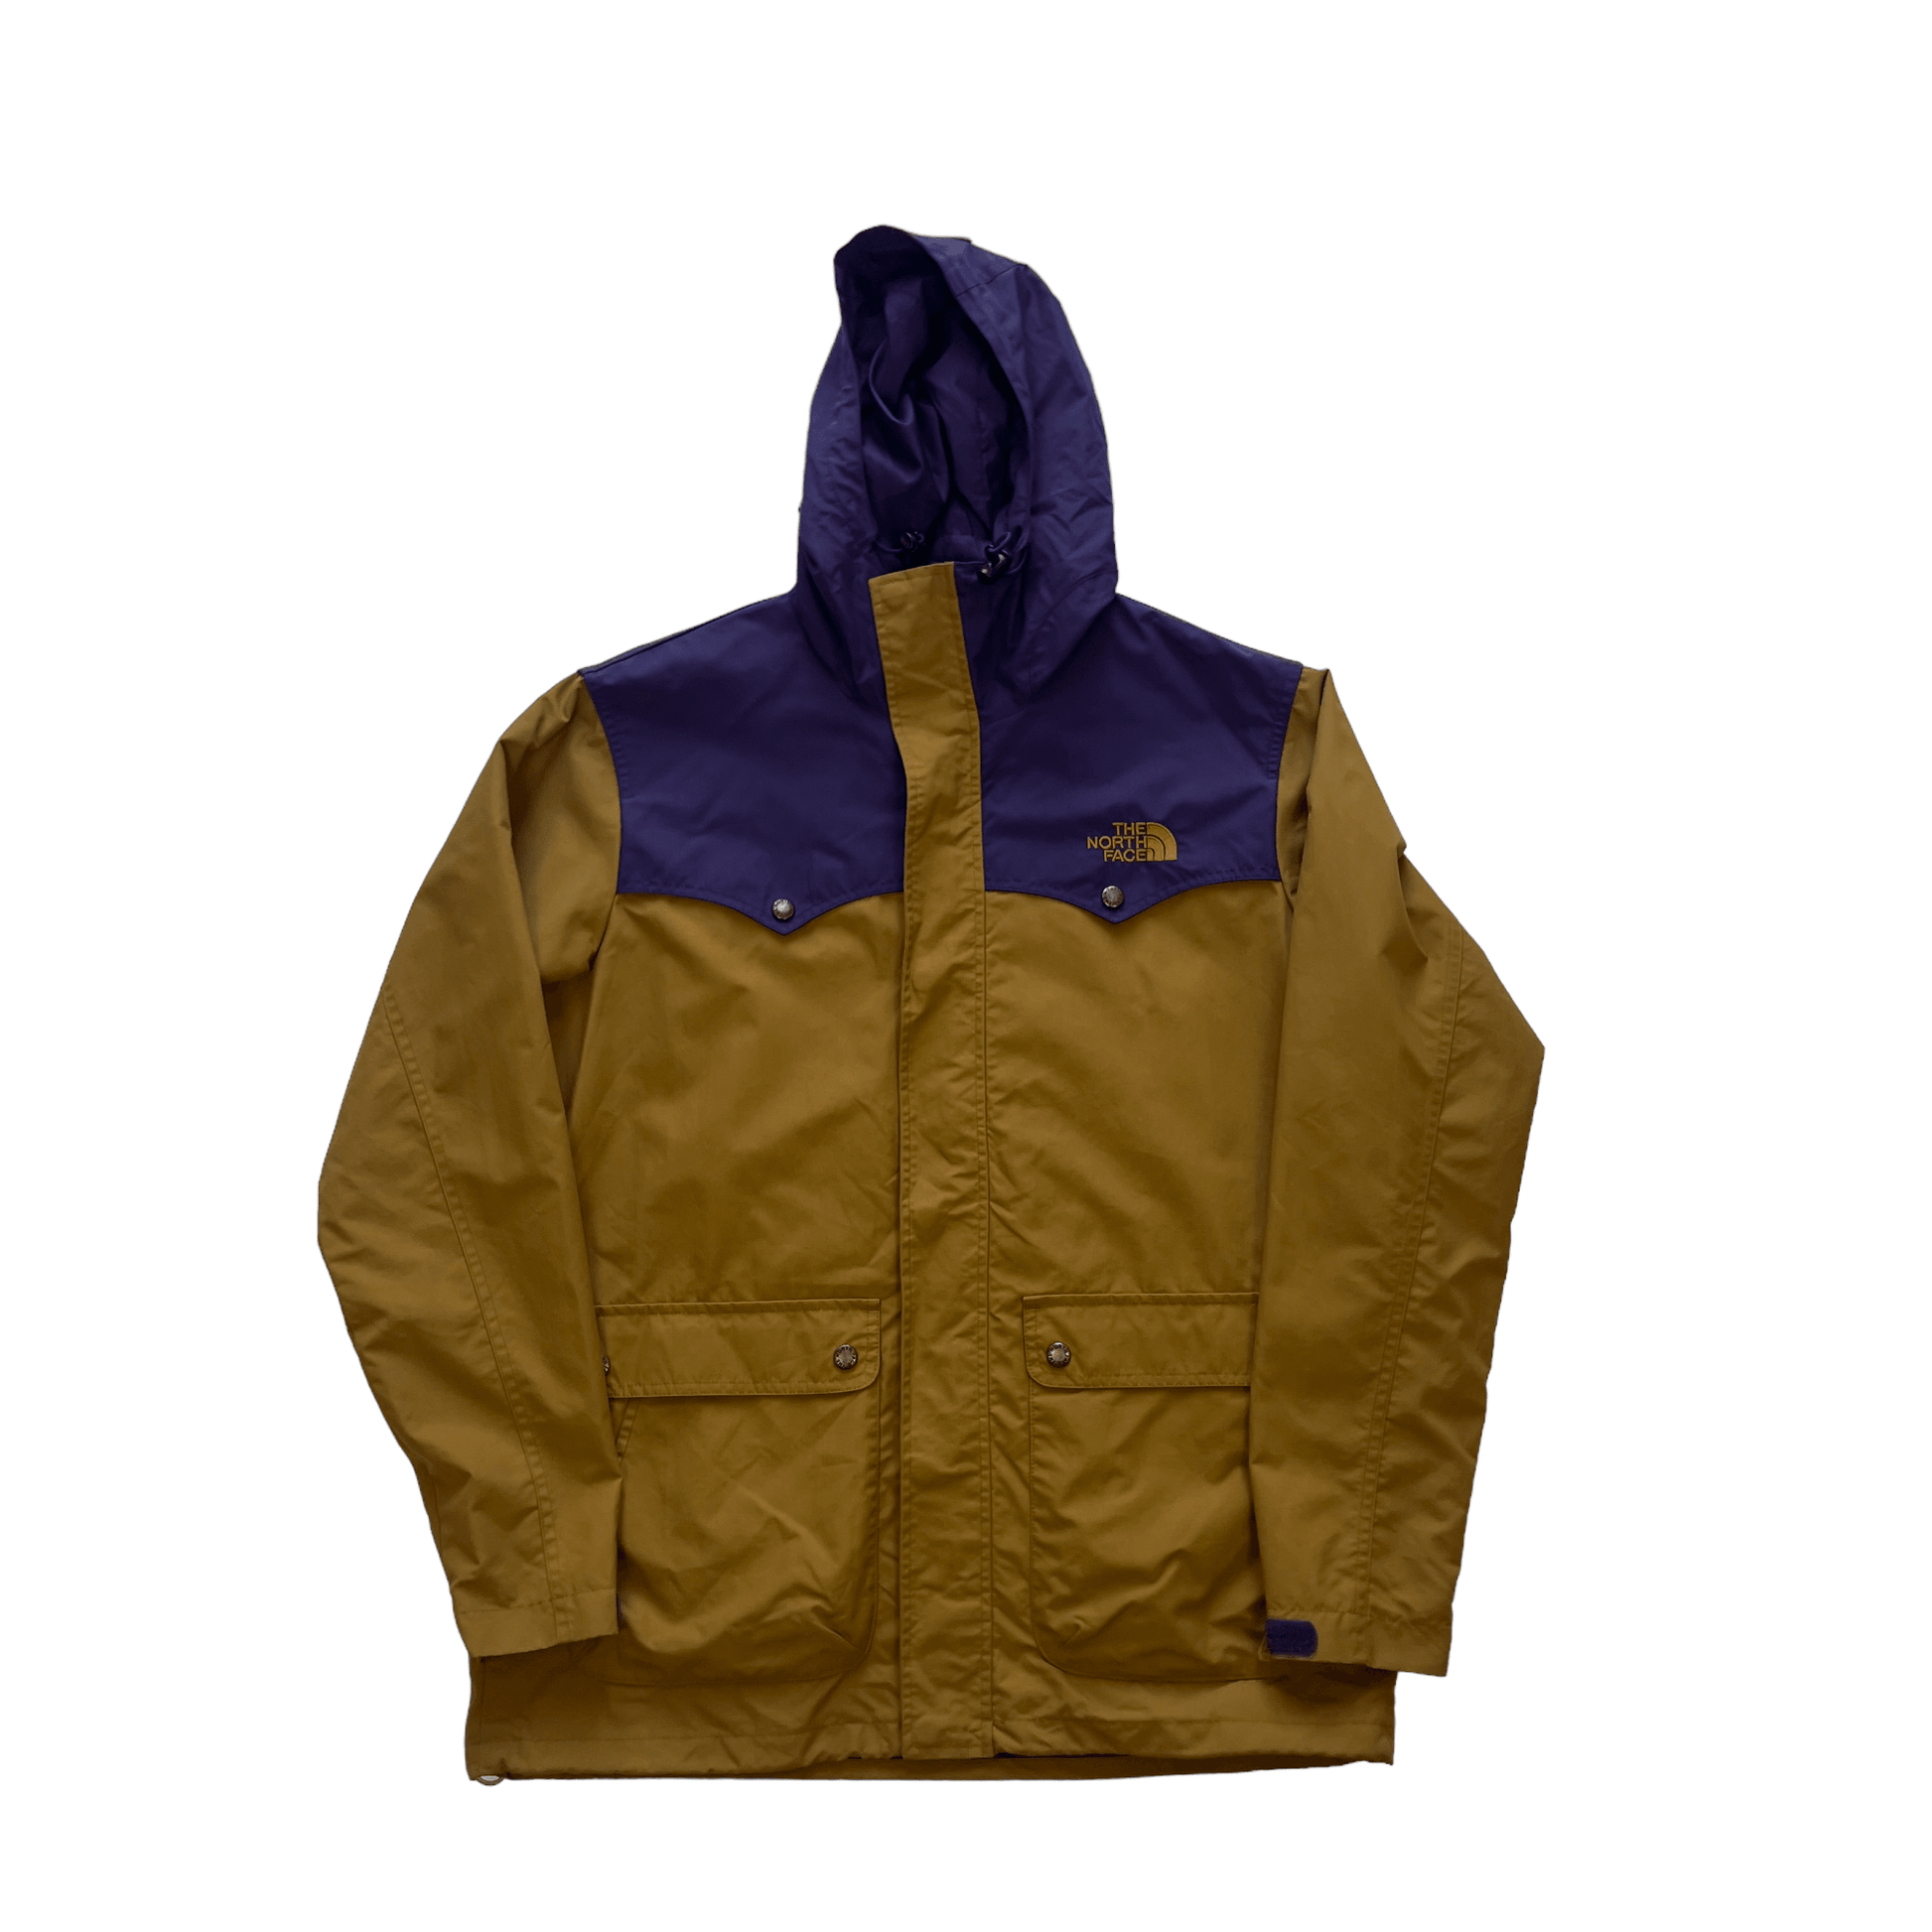 Vintage Beige + Purple The North Face (TNF) Jacket - Large - The Streetwear Studio